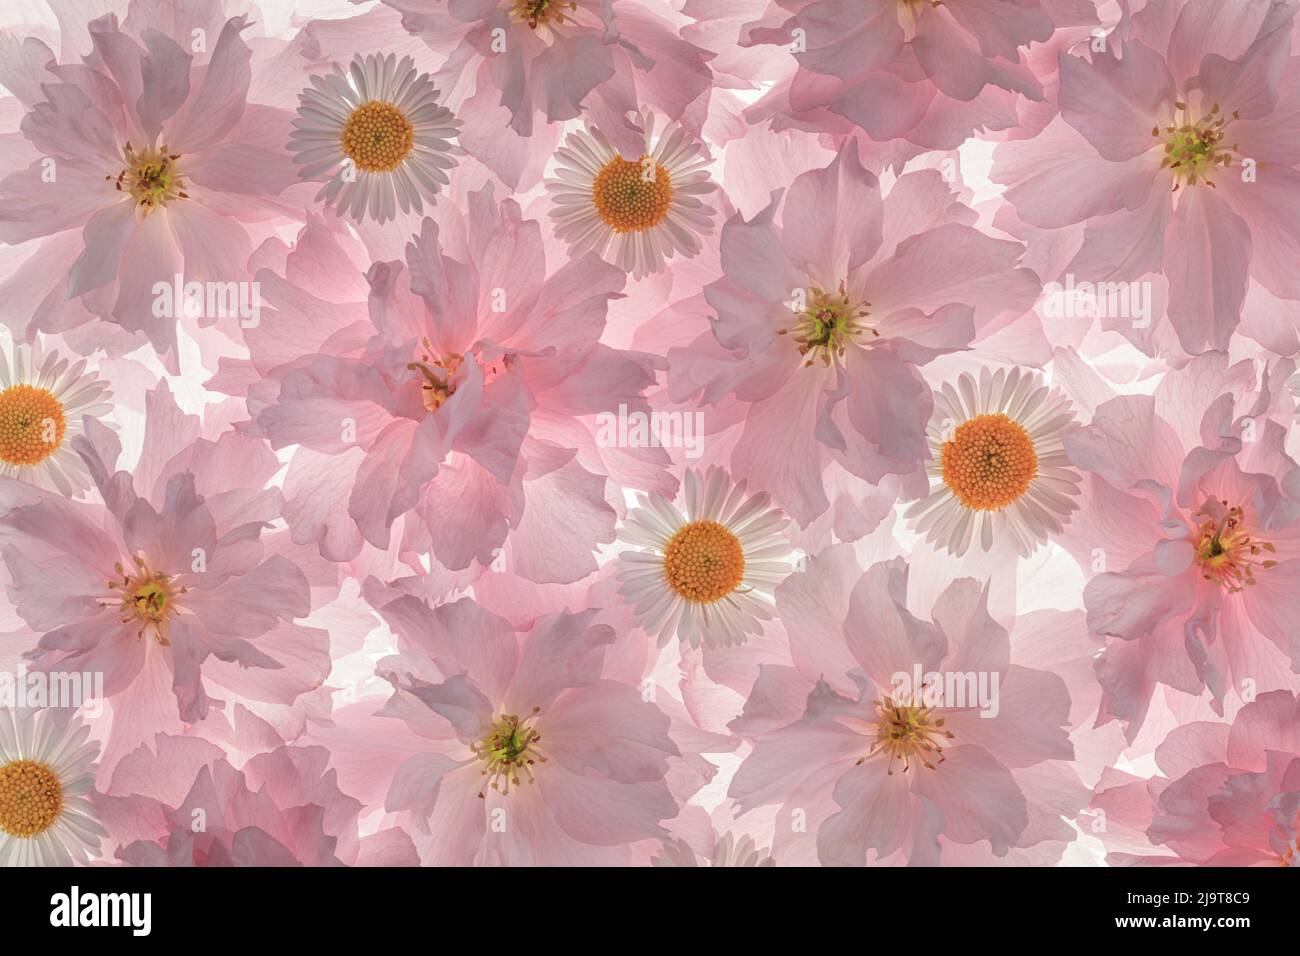 USA, Washington State, Seabeck. Flowering pink cherry blossom and Santa Barbara daisy patterns. Stock Photo